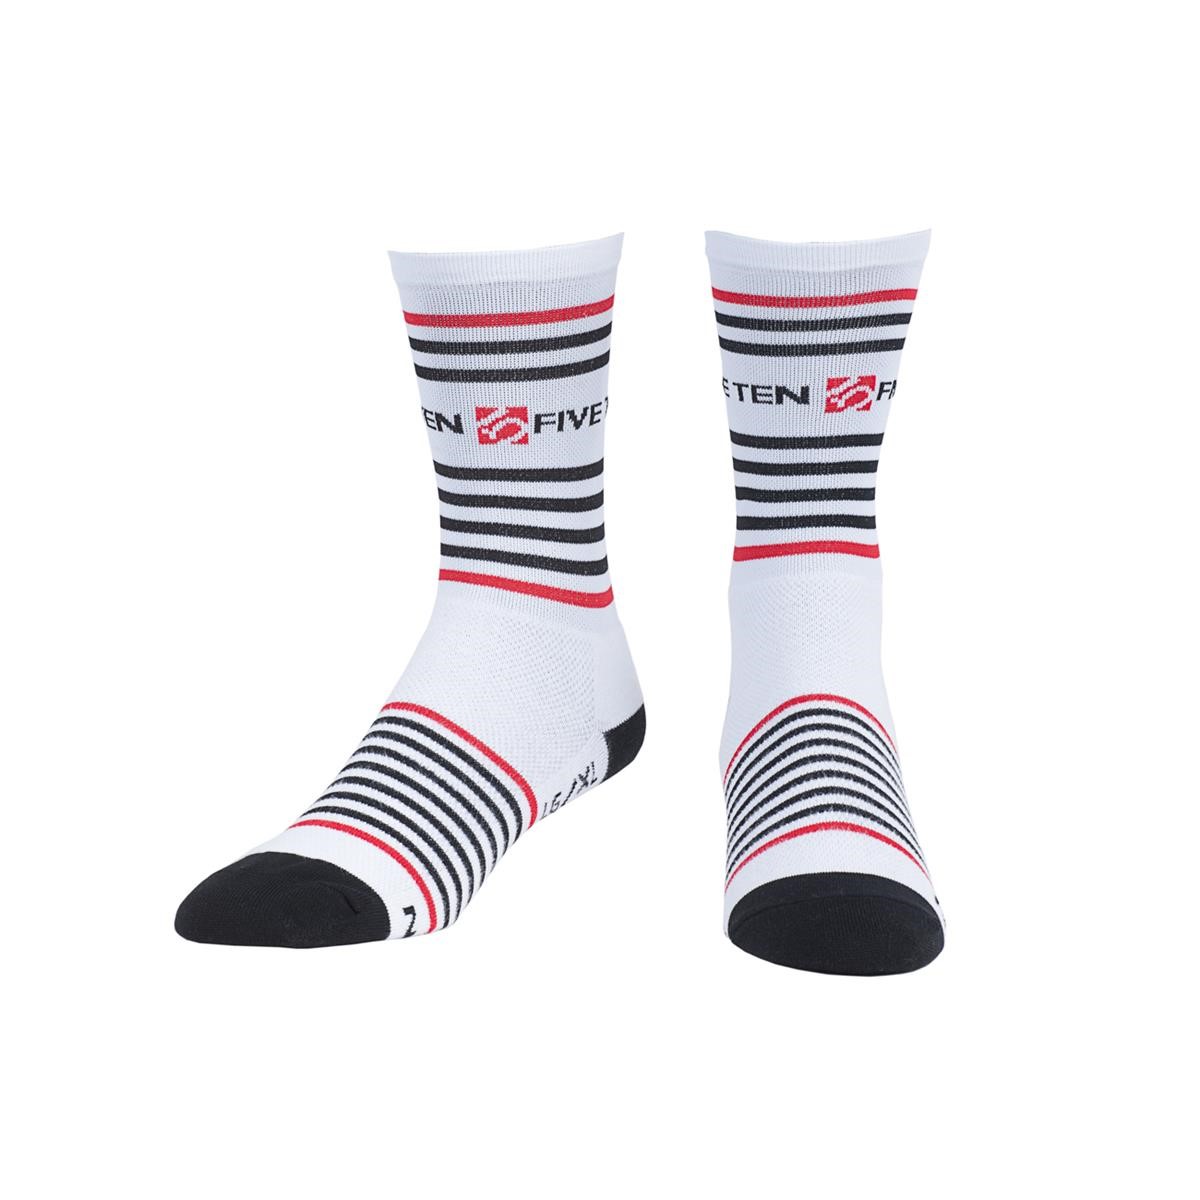 Five Ten Socks Stripes White/Black/Red